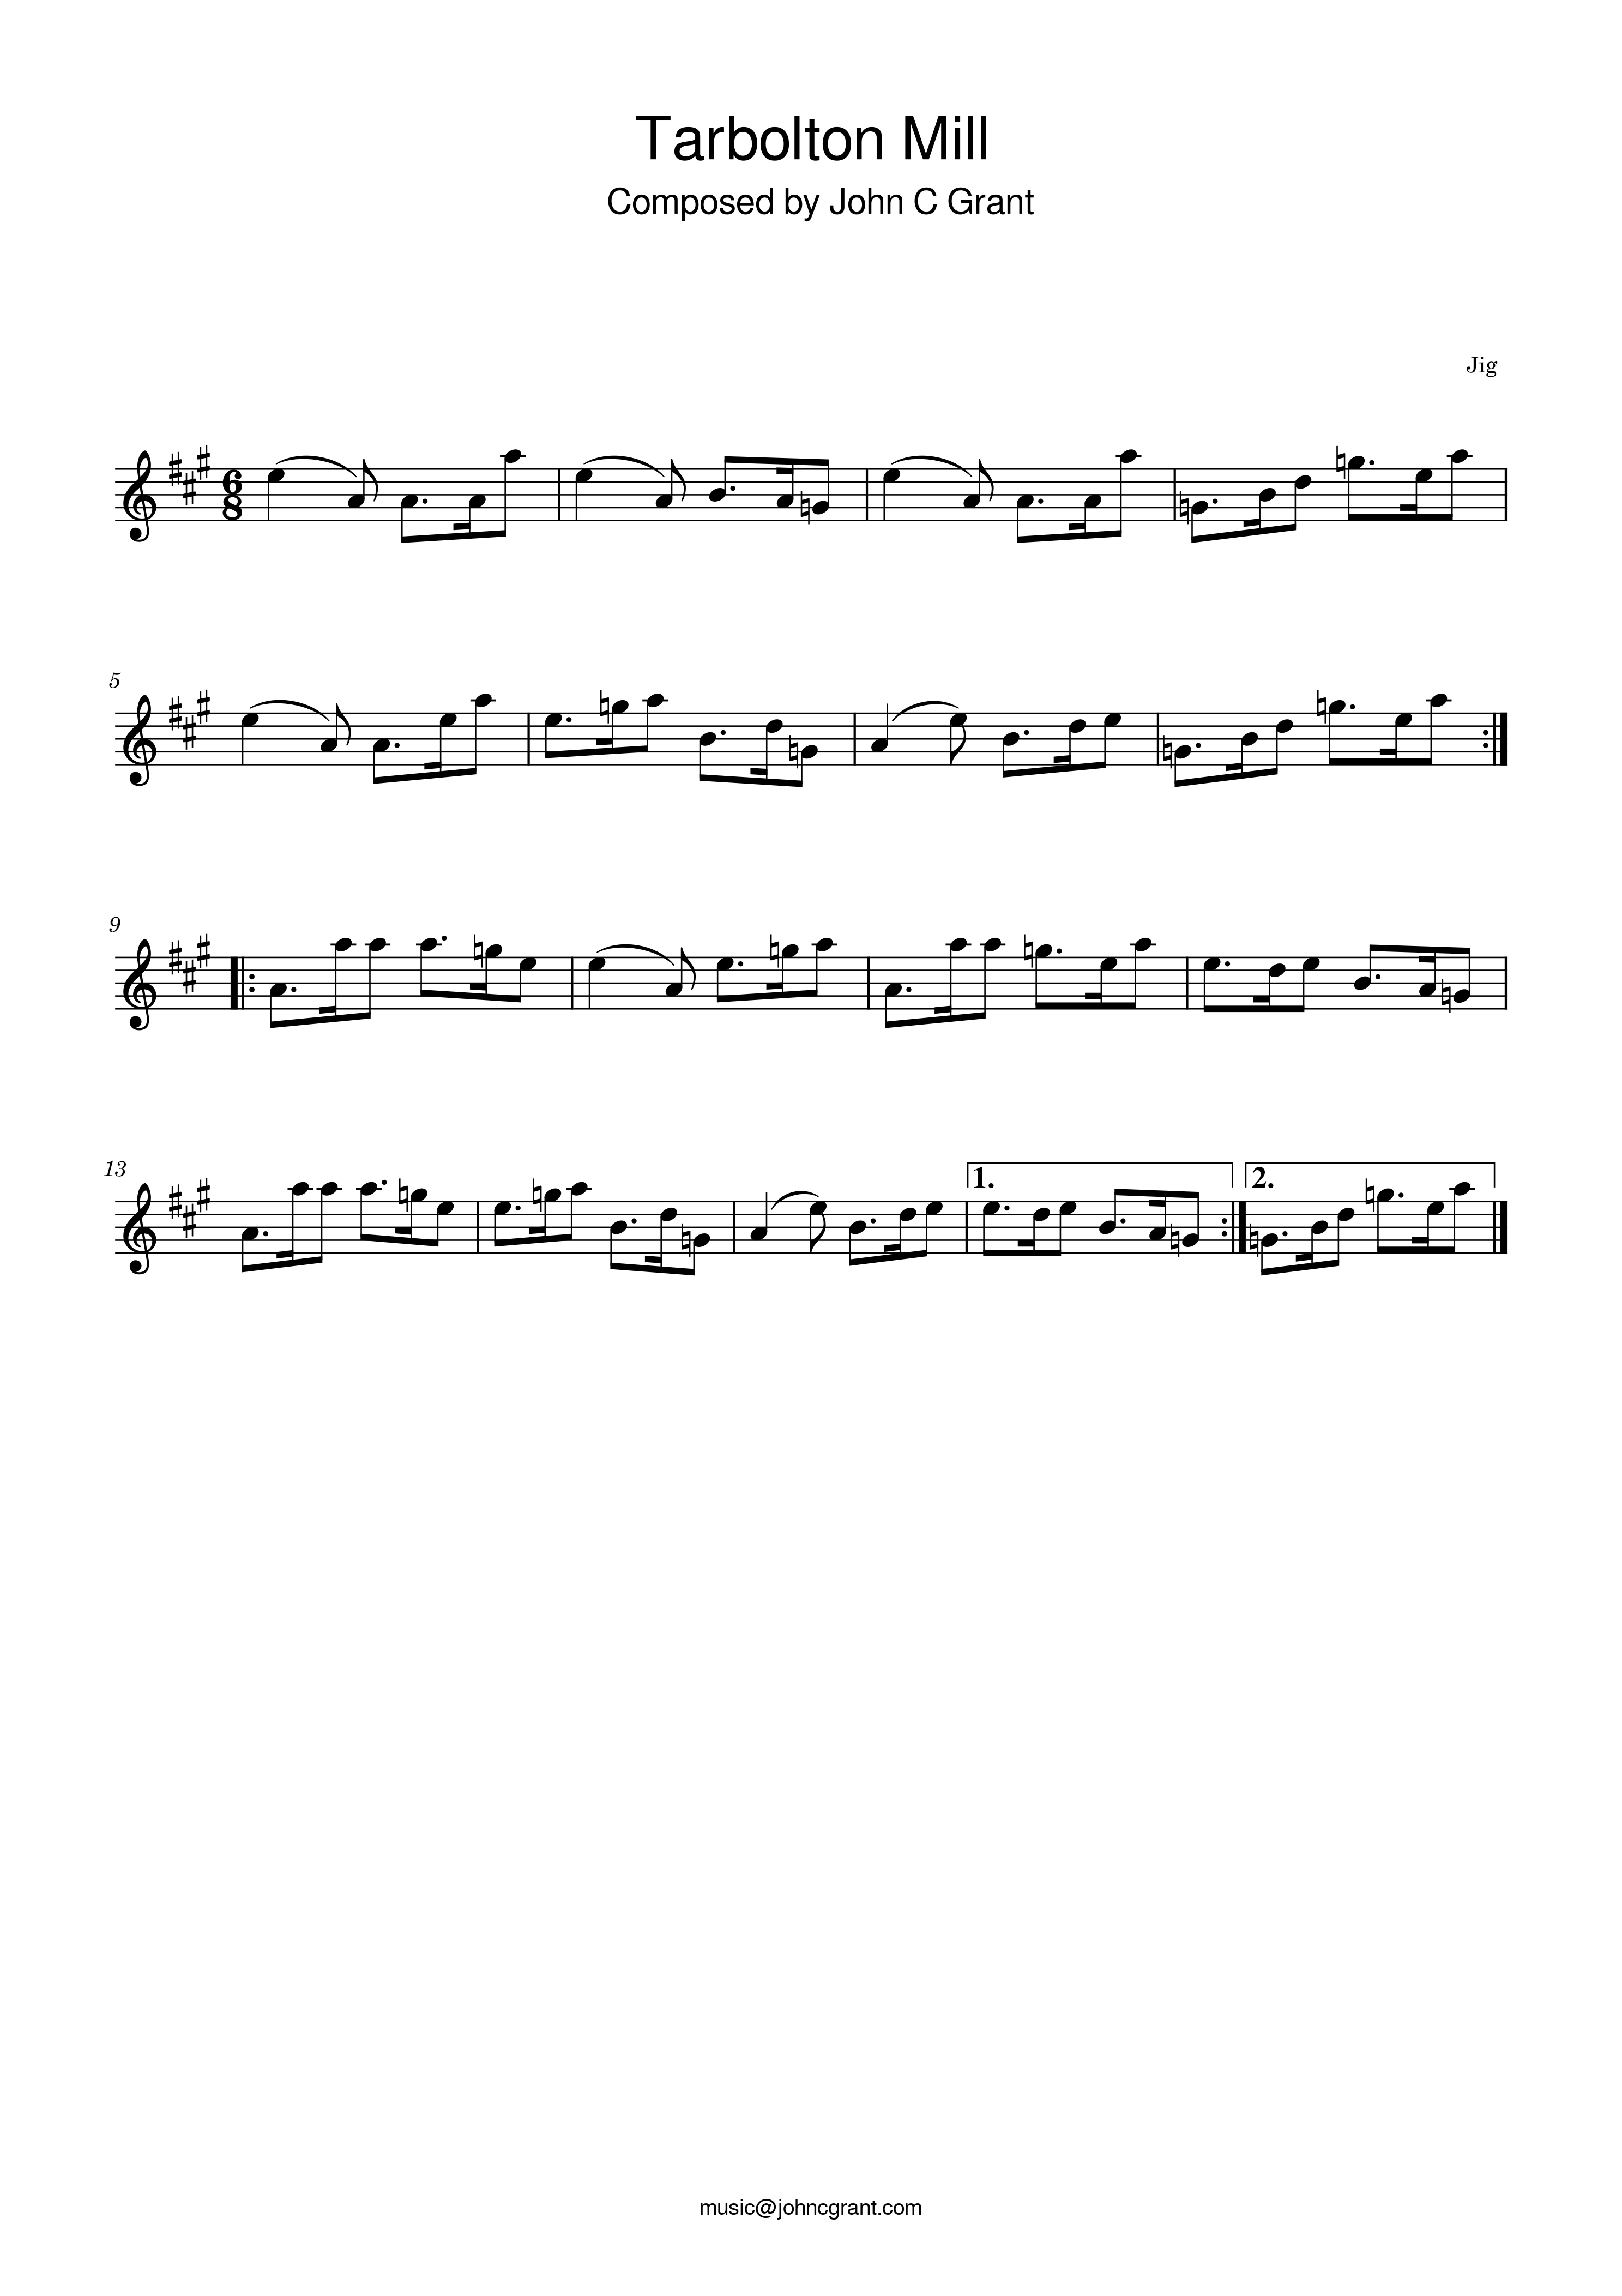 Tarbolton Mill - Composed by John C Grant (https://johncgrant.com). Traditional composer from Kilmarnock, Ayrshire, Scotland.